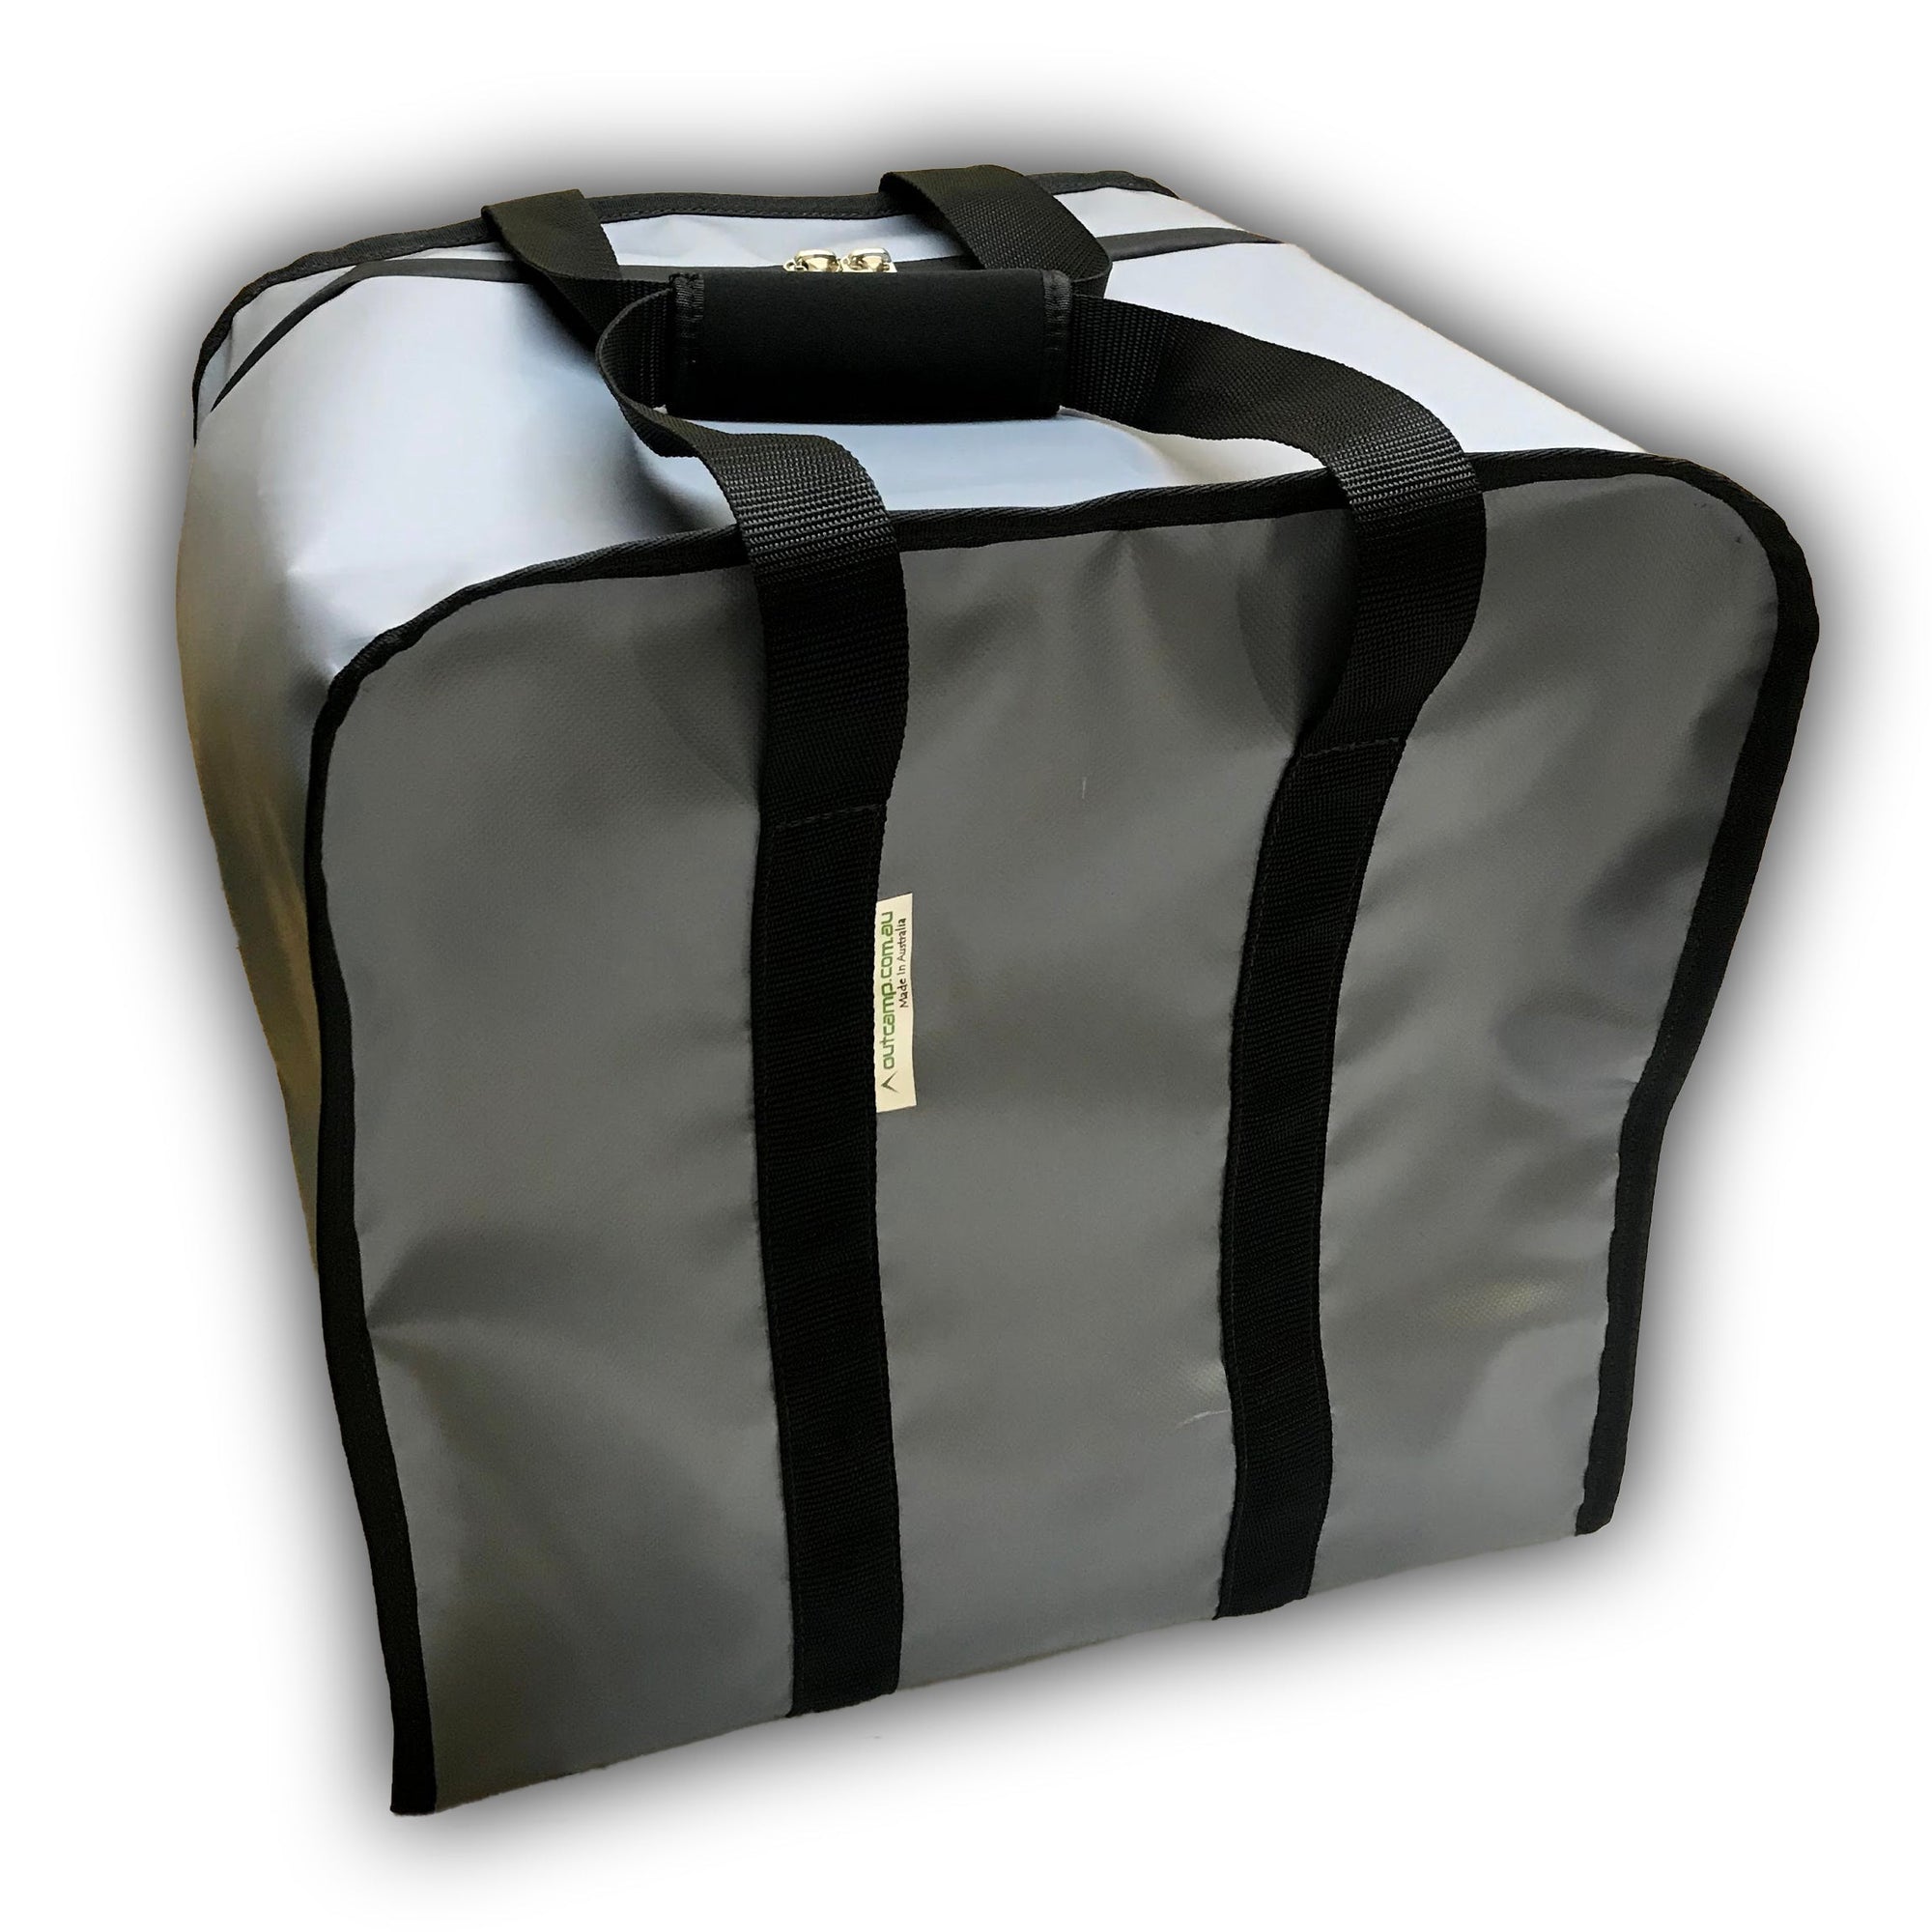 Thetford Excellence 565 Porta Potti carry bag for the caravan